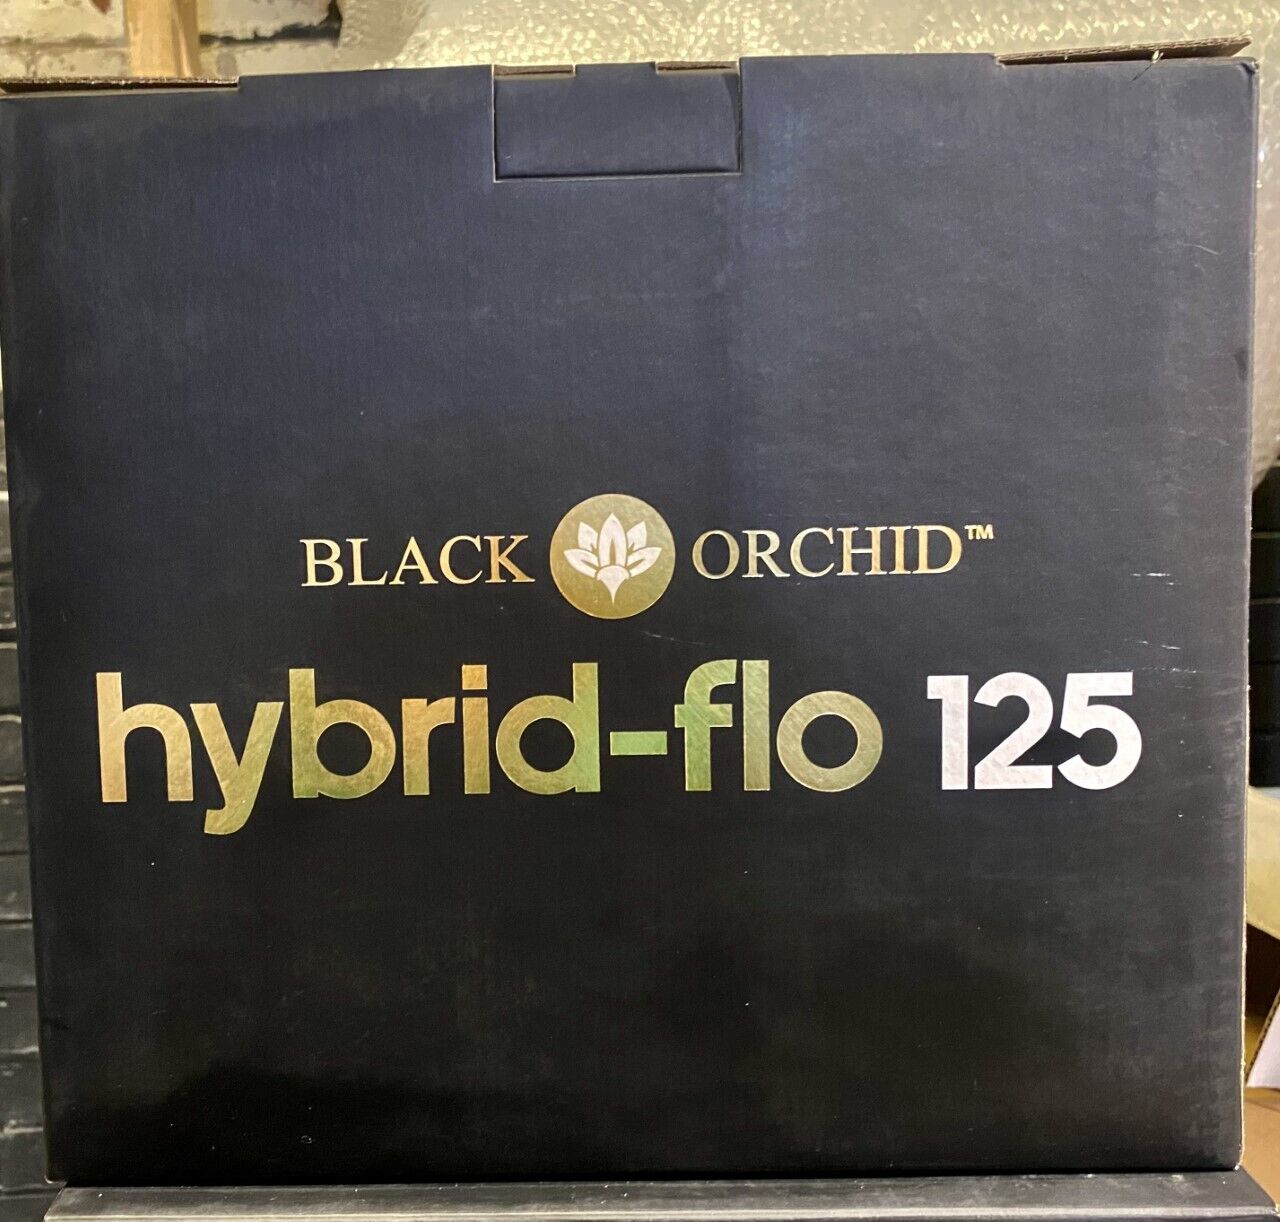 Black Orchid Hybrid Flow in Line Extractor Fan 5" 125mm 280m3/h